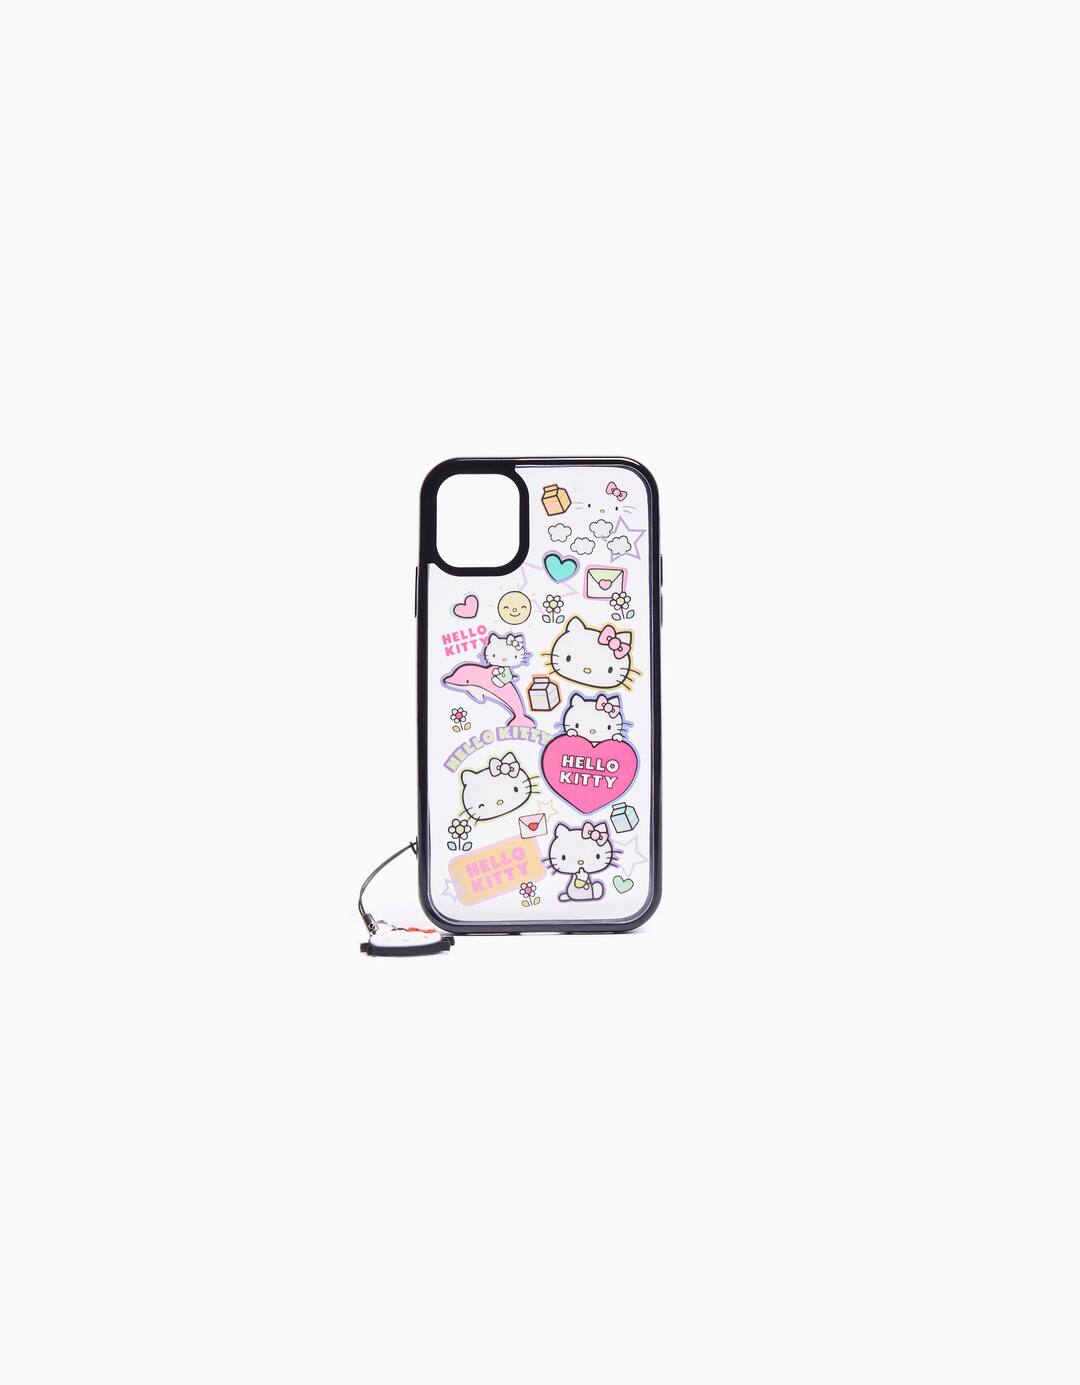 Sarung ponsel iPhone ornamen Hello Kitty